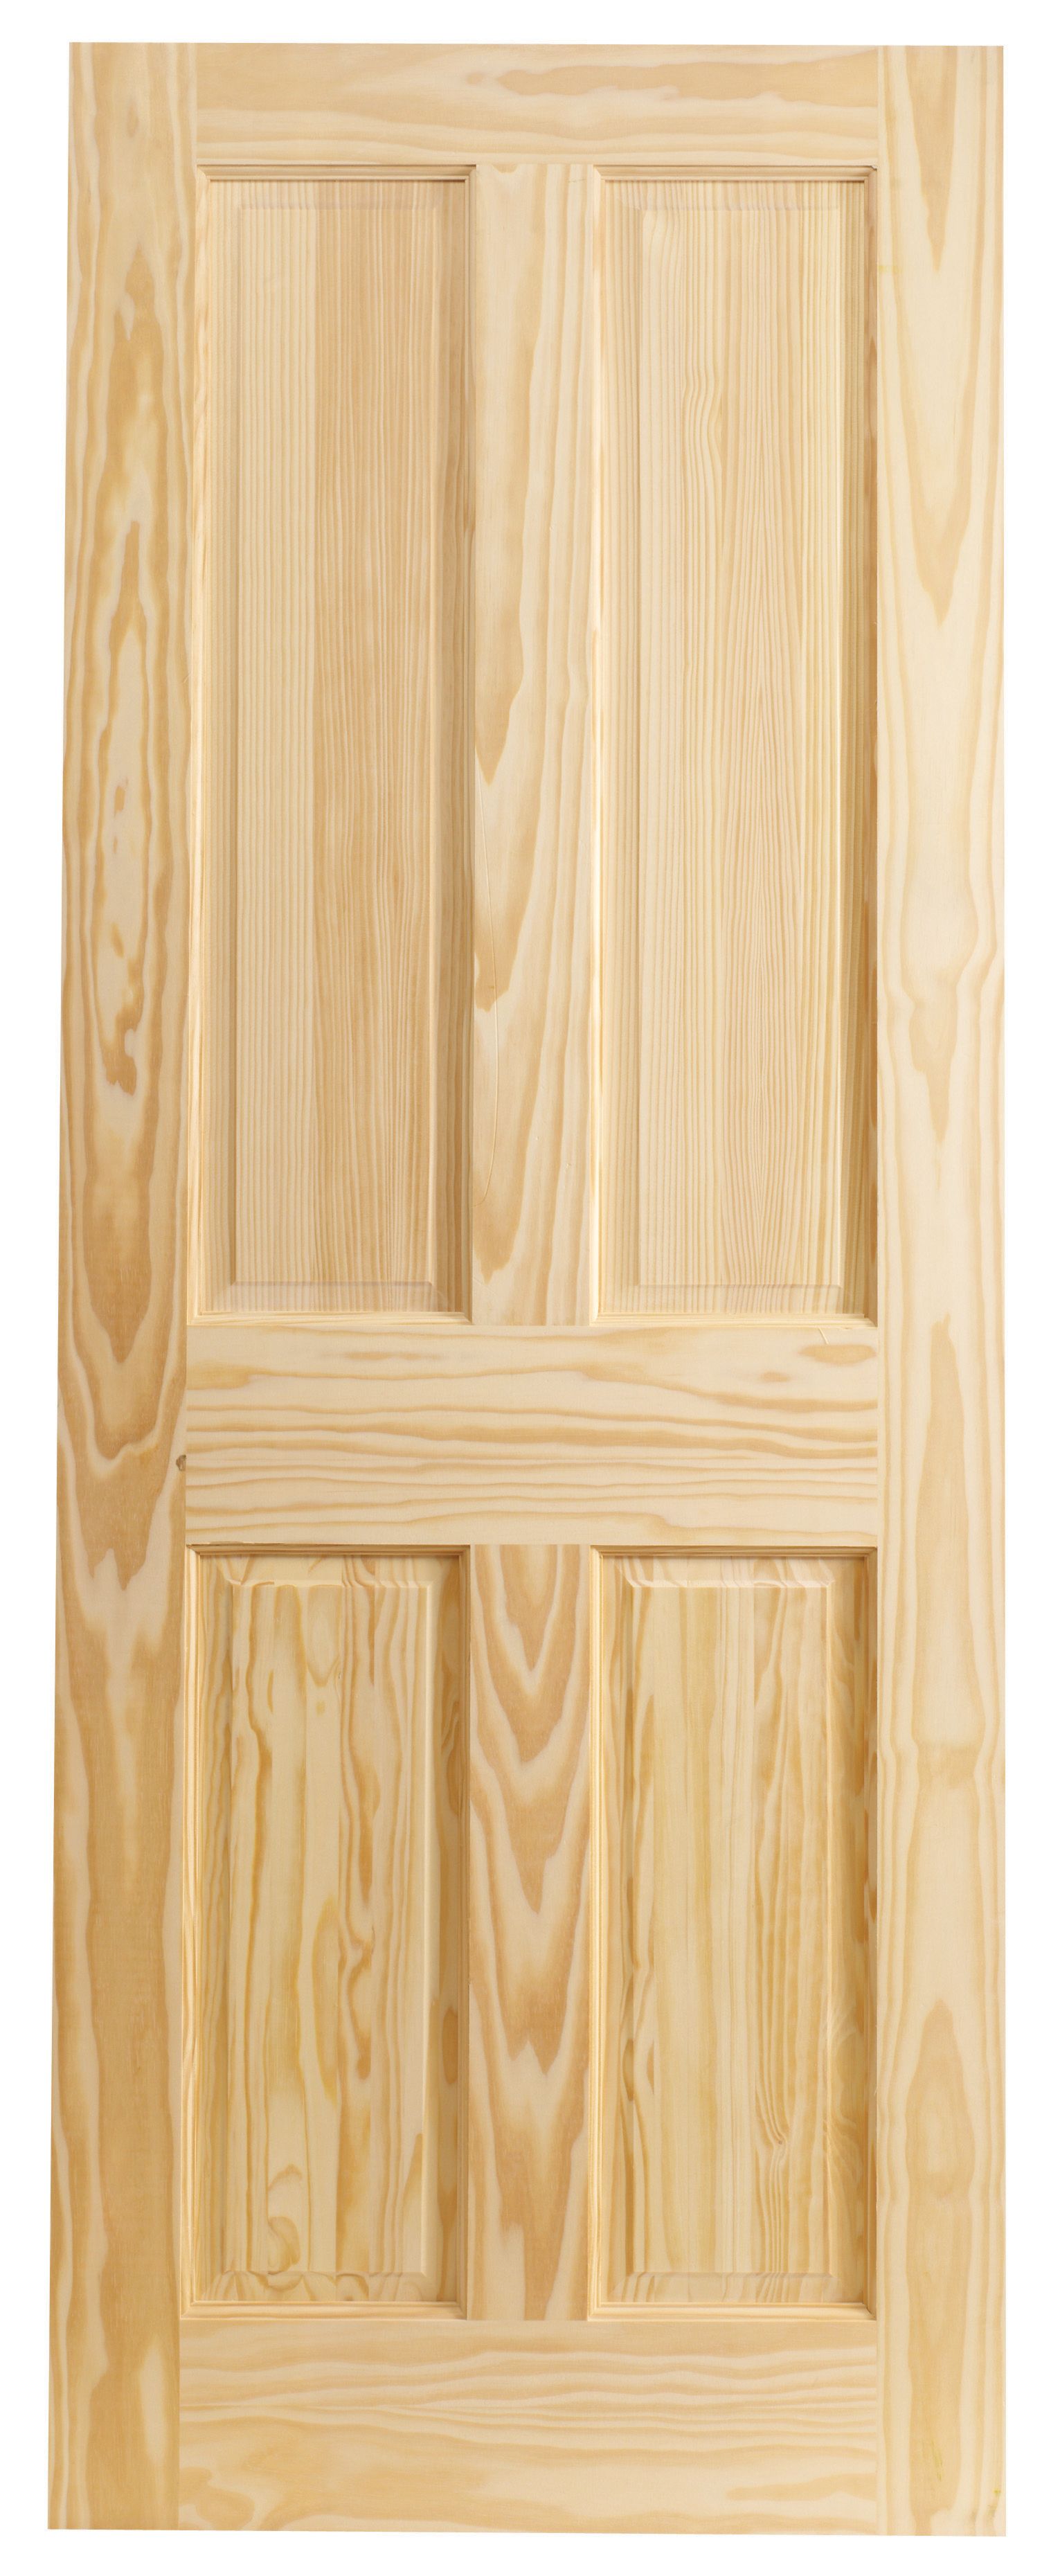 Image of Wickes Skipton Clear Pine 4 Panel Internal Door - 1981 x 610mm